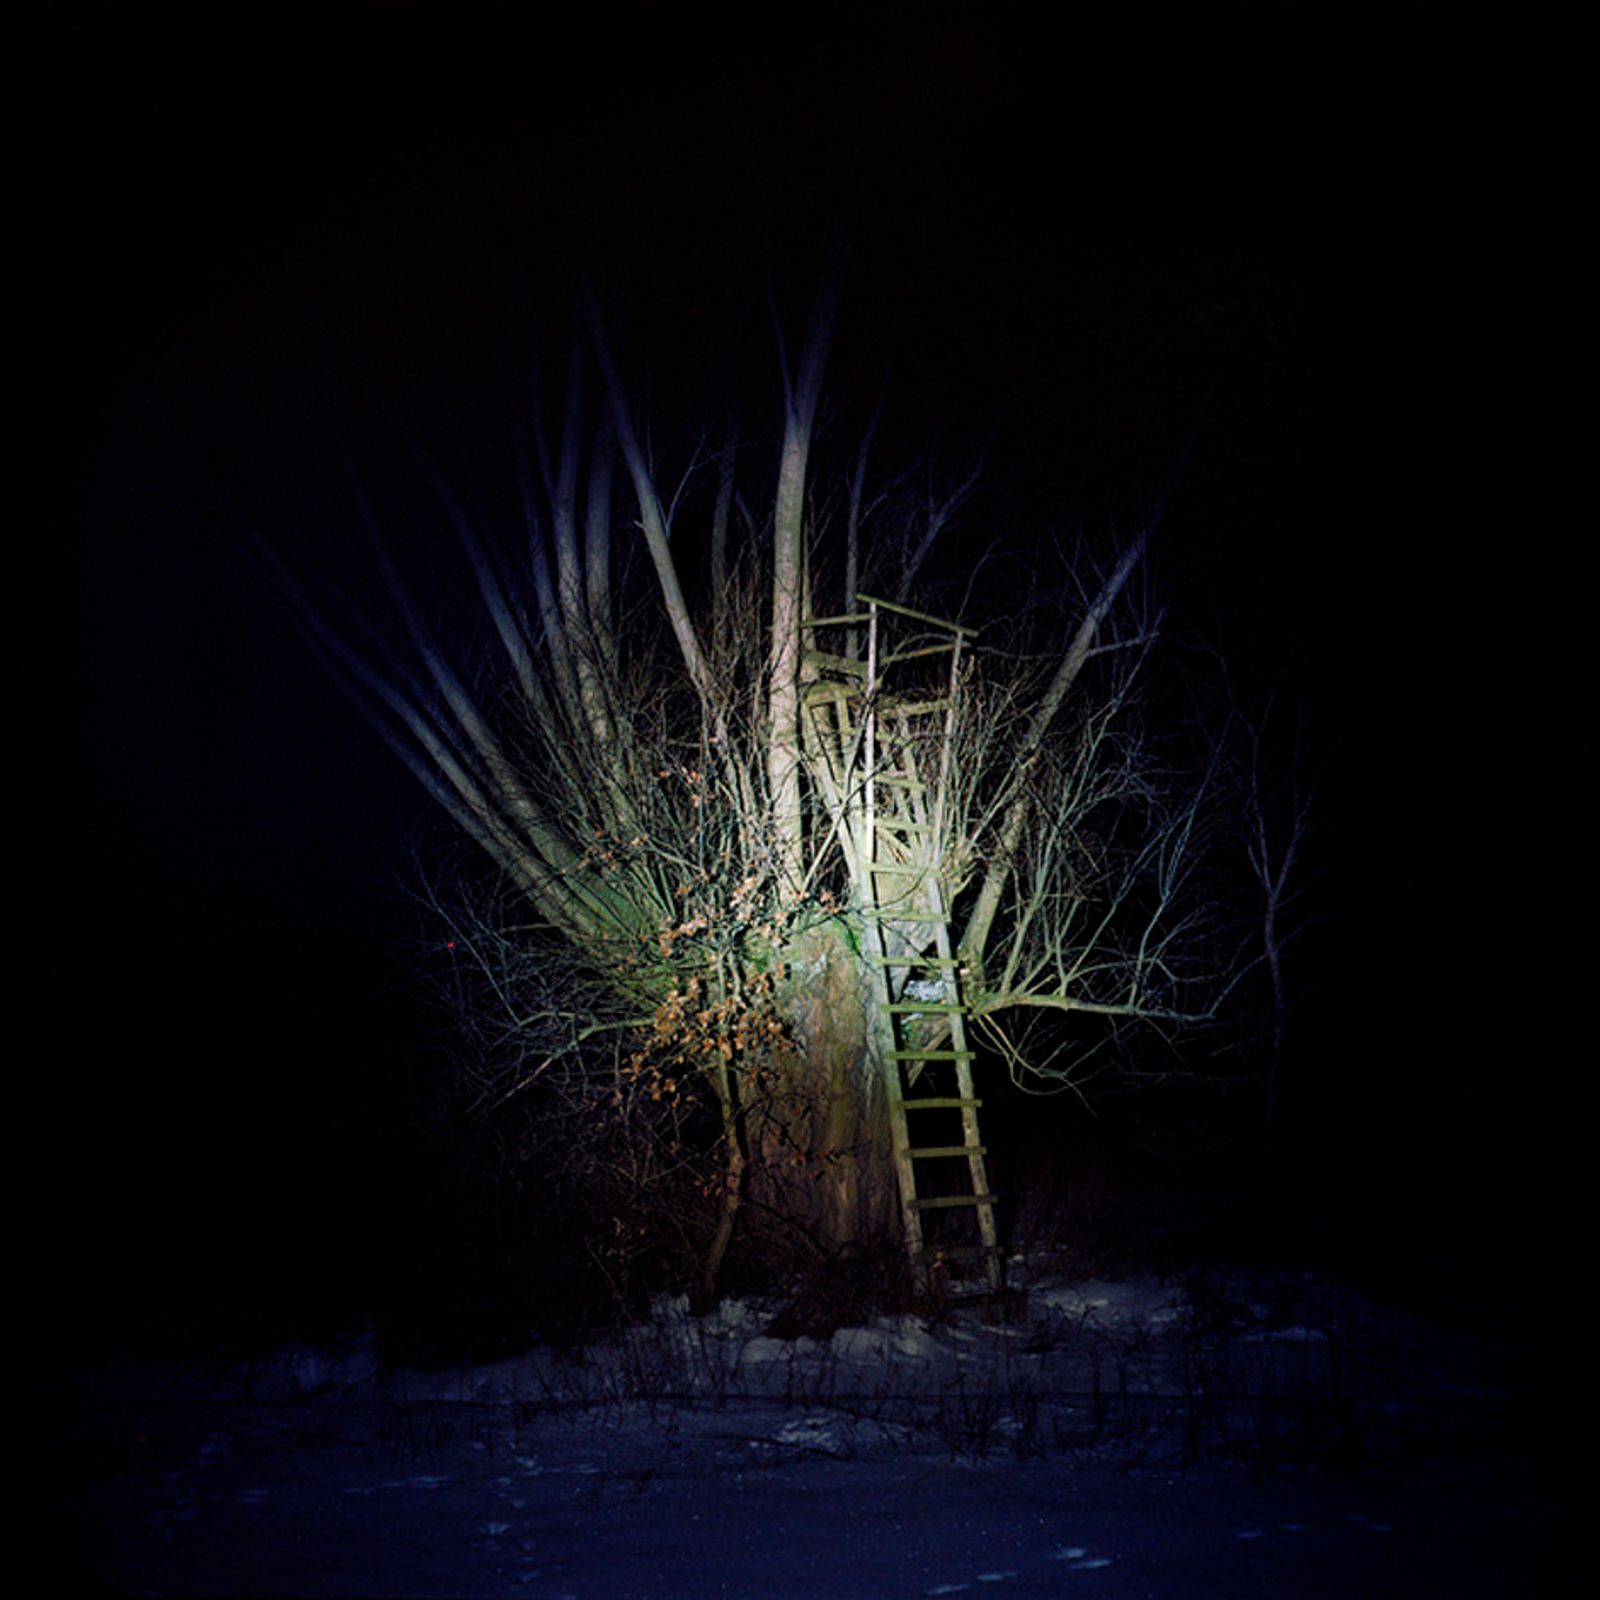 © Ira Alaeva - Image from the Nachtgestelle photography project